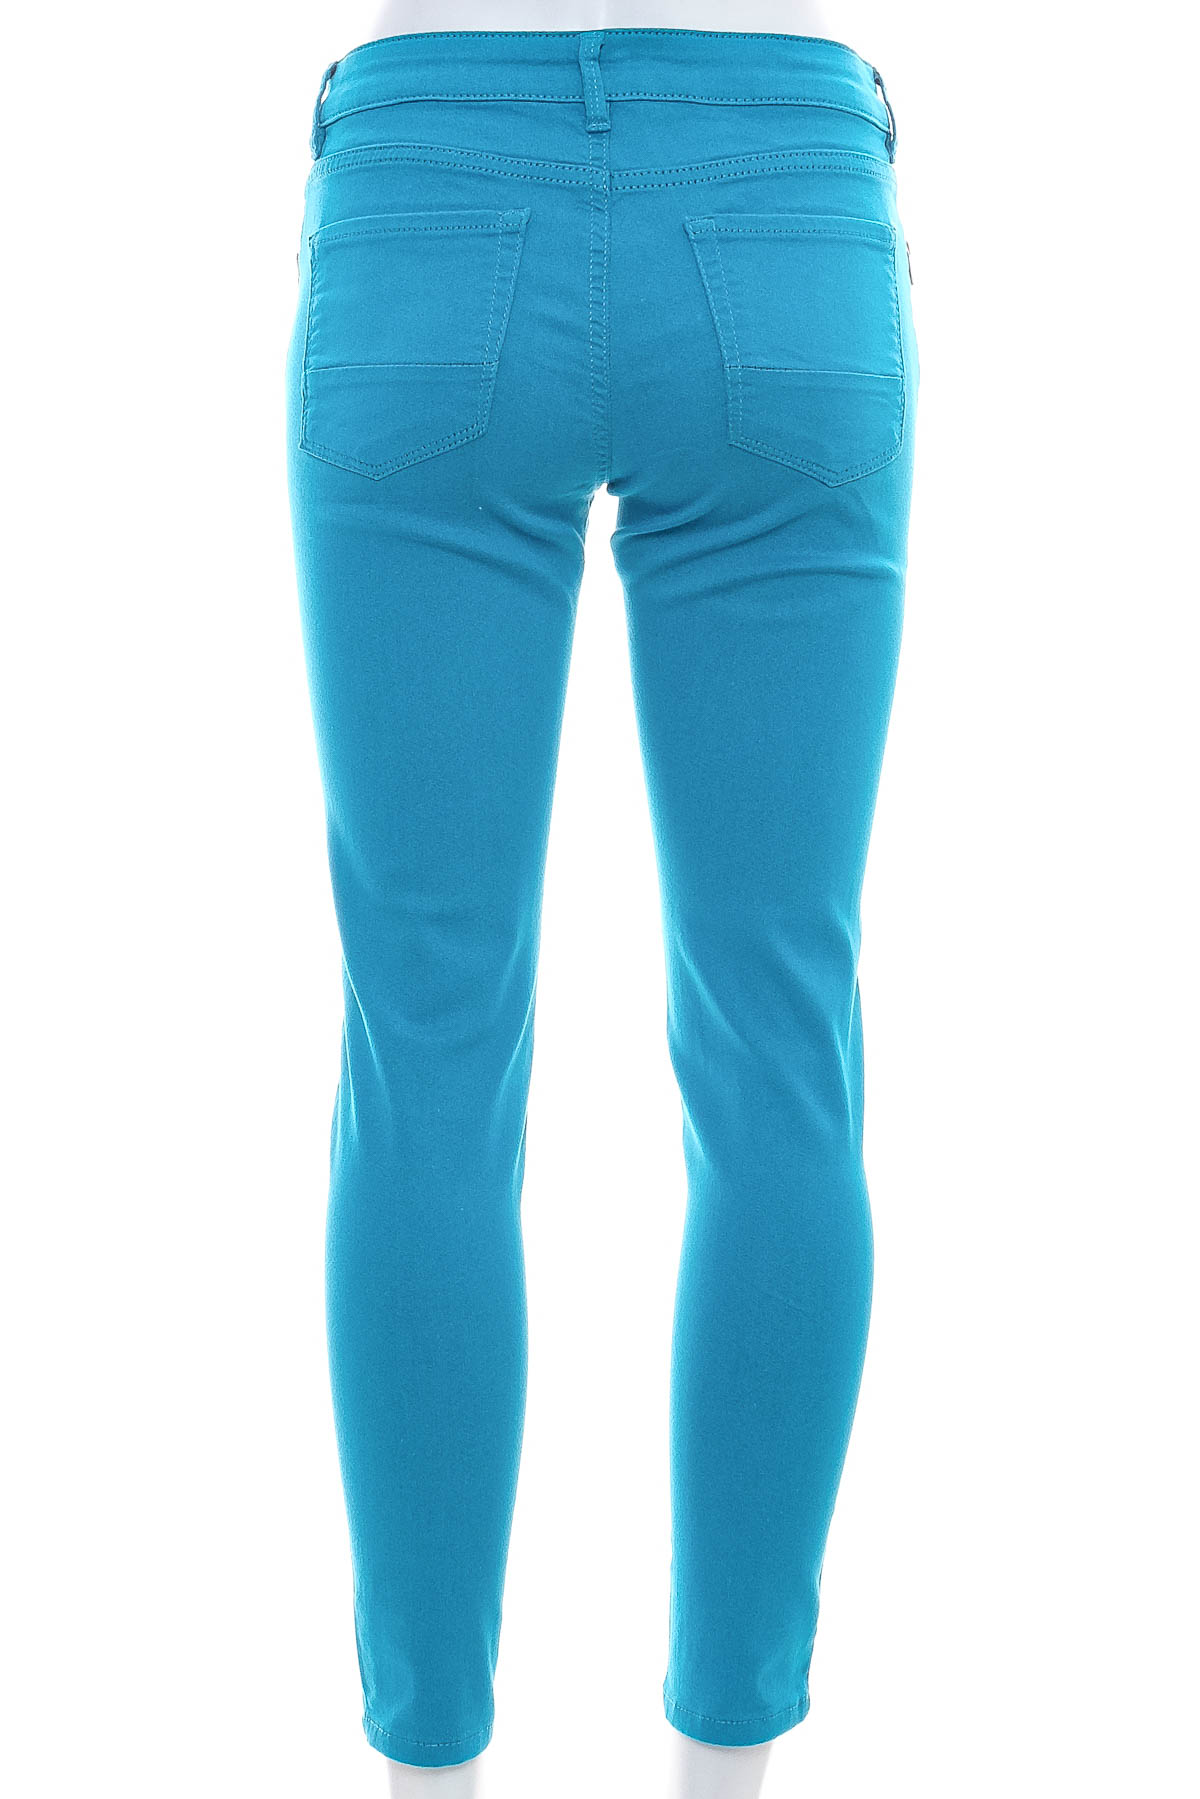 Women's trousers - Orsay - 1